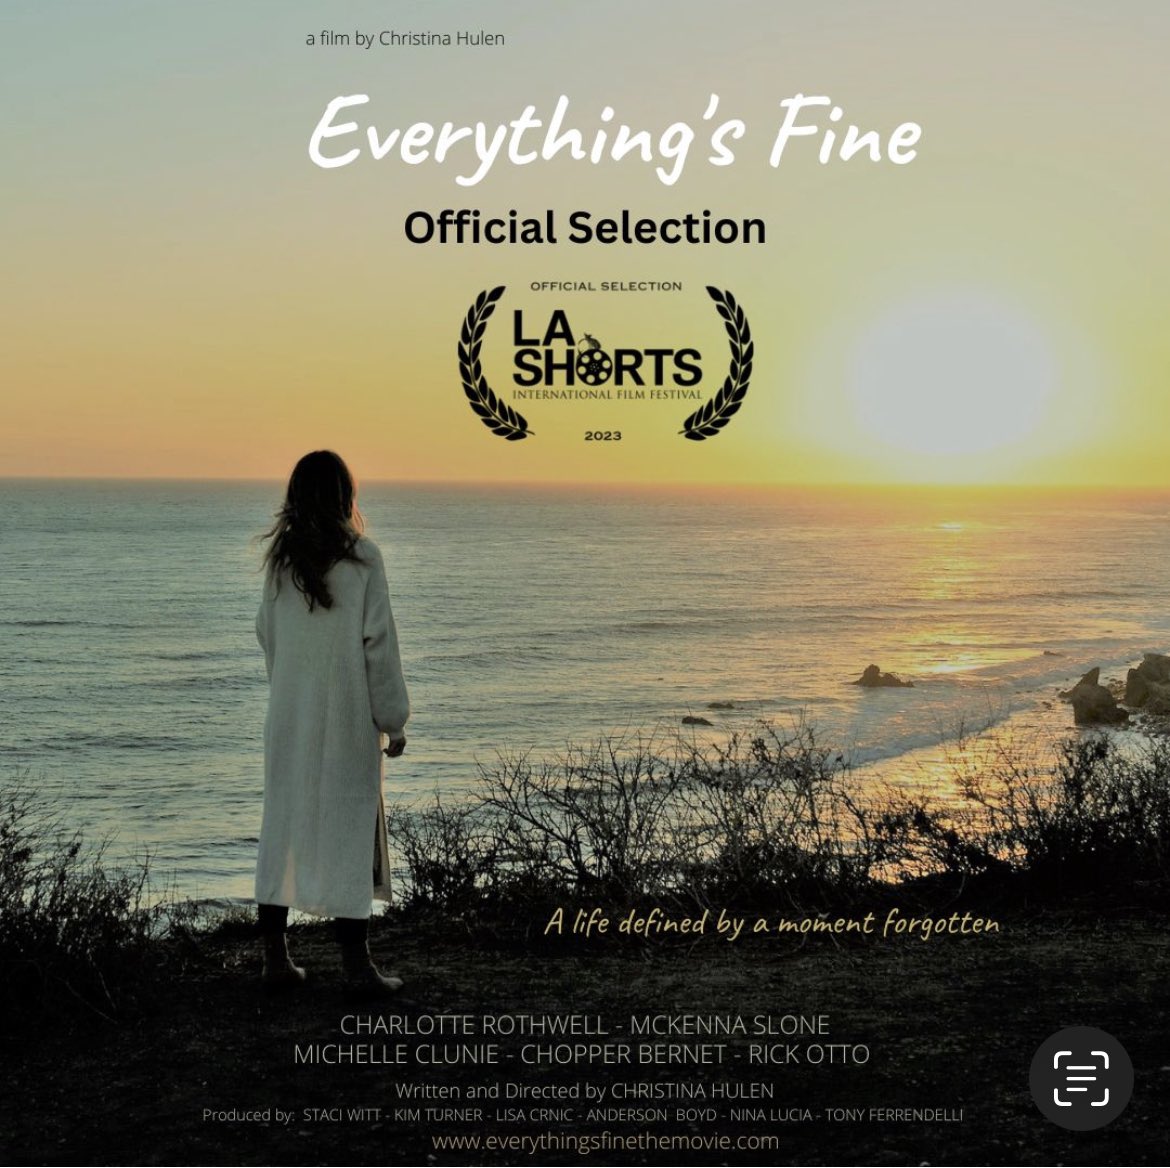 UPDATE!! Everything’s Fine will premiere at the LA Shorts International Film Festival, July 19-30 at LA LIVE. Spread the word! @lashortsfest #womendirectors #womensupportingwomen #womenwriters #PTSD #stopgunviolence #lgbt #lgbtq